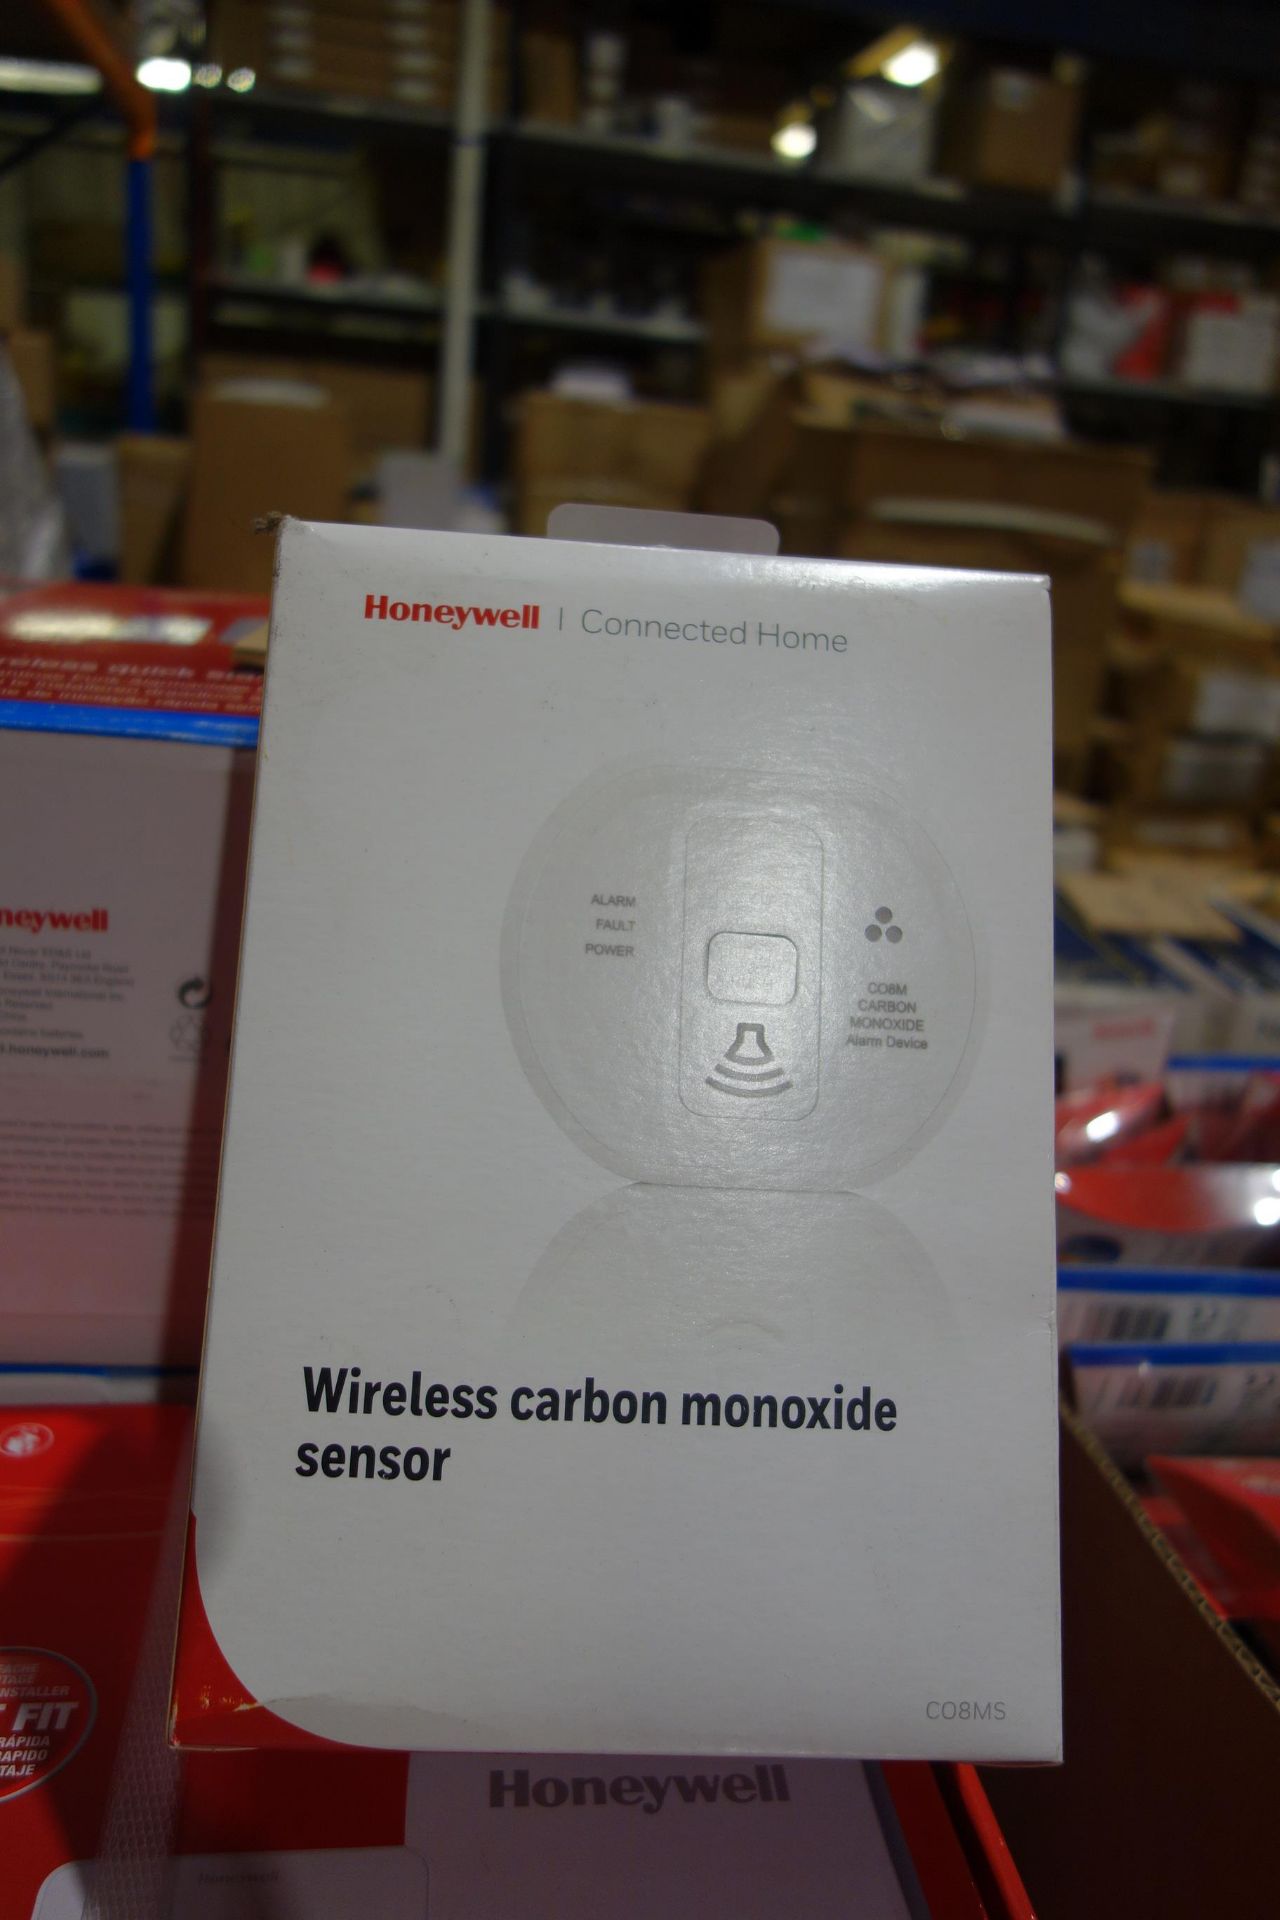 8 x Honeywell C08MS Wireless Carbon Monoxide Alarm